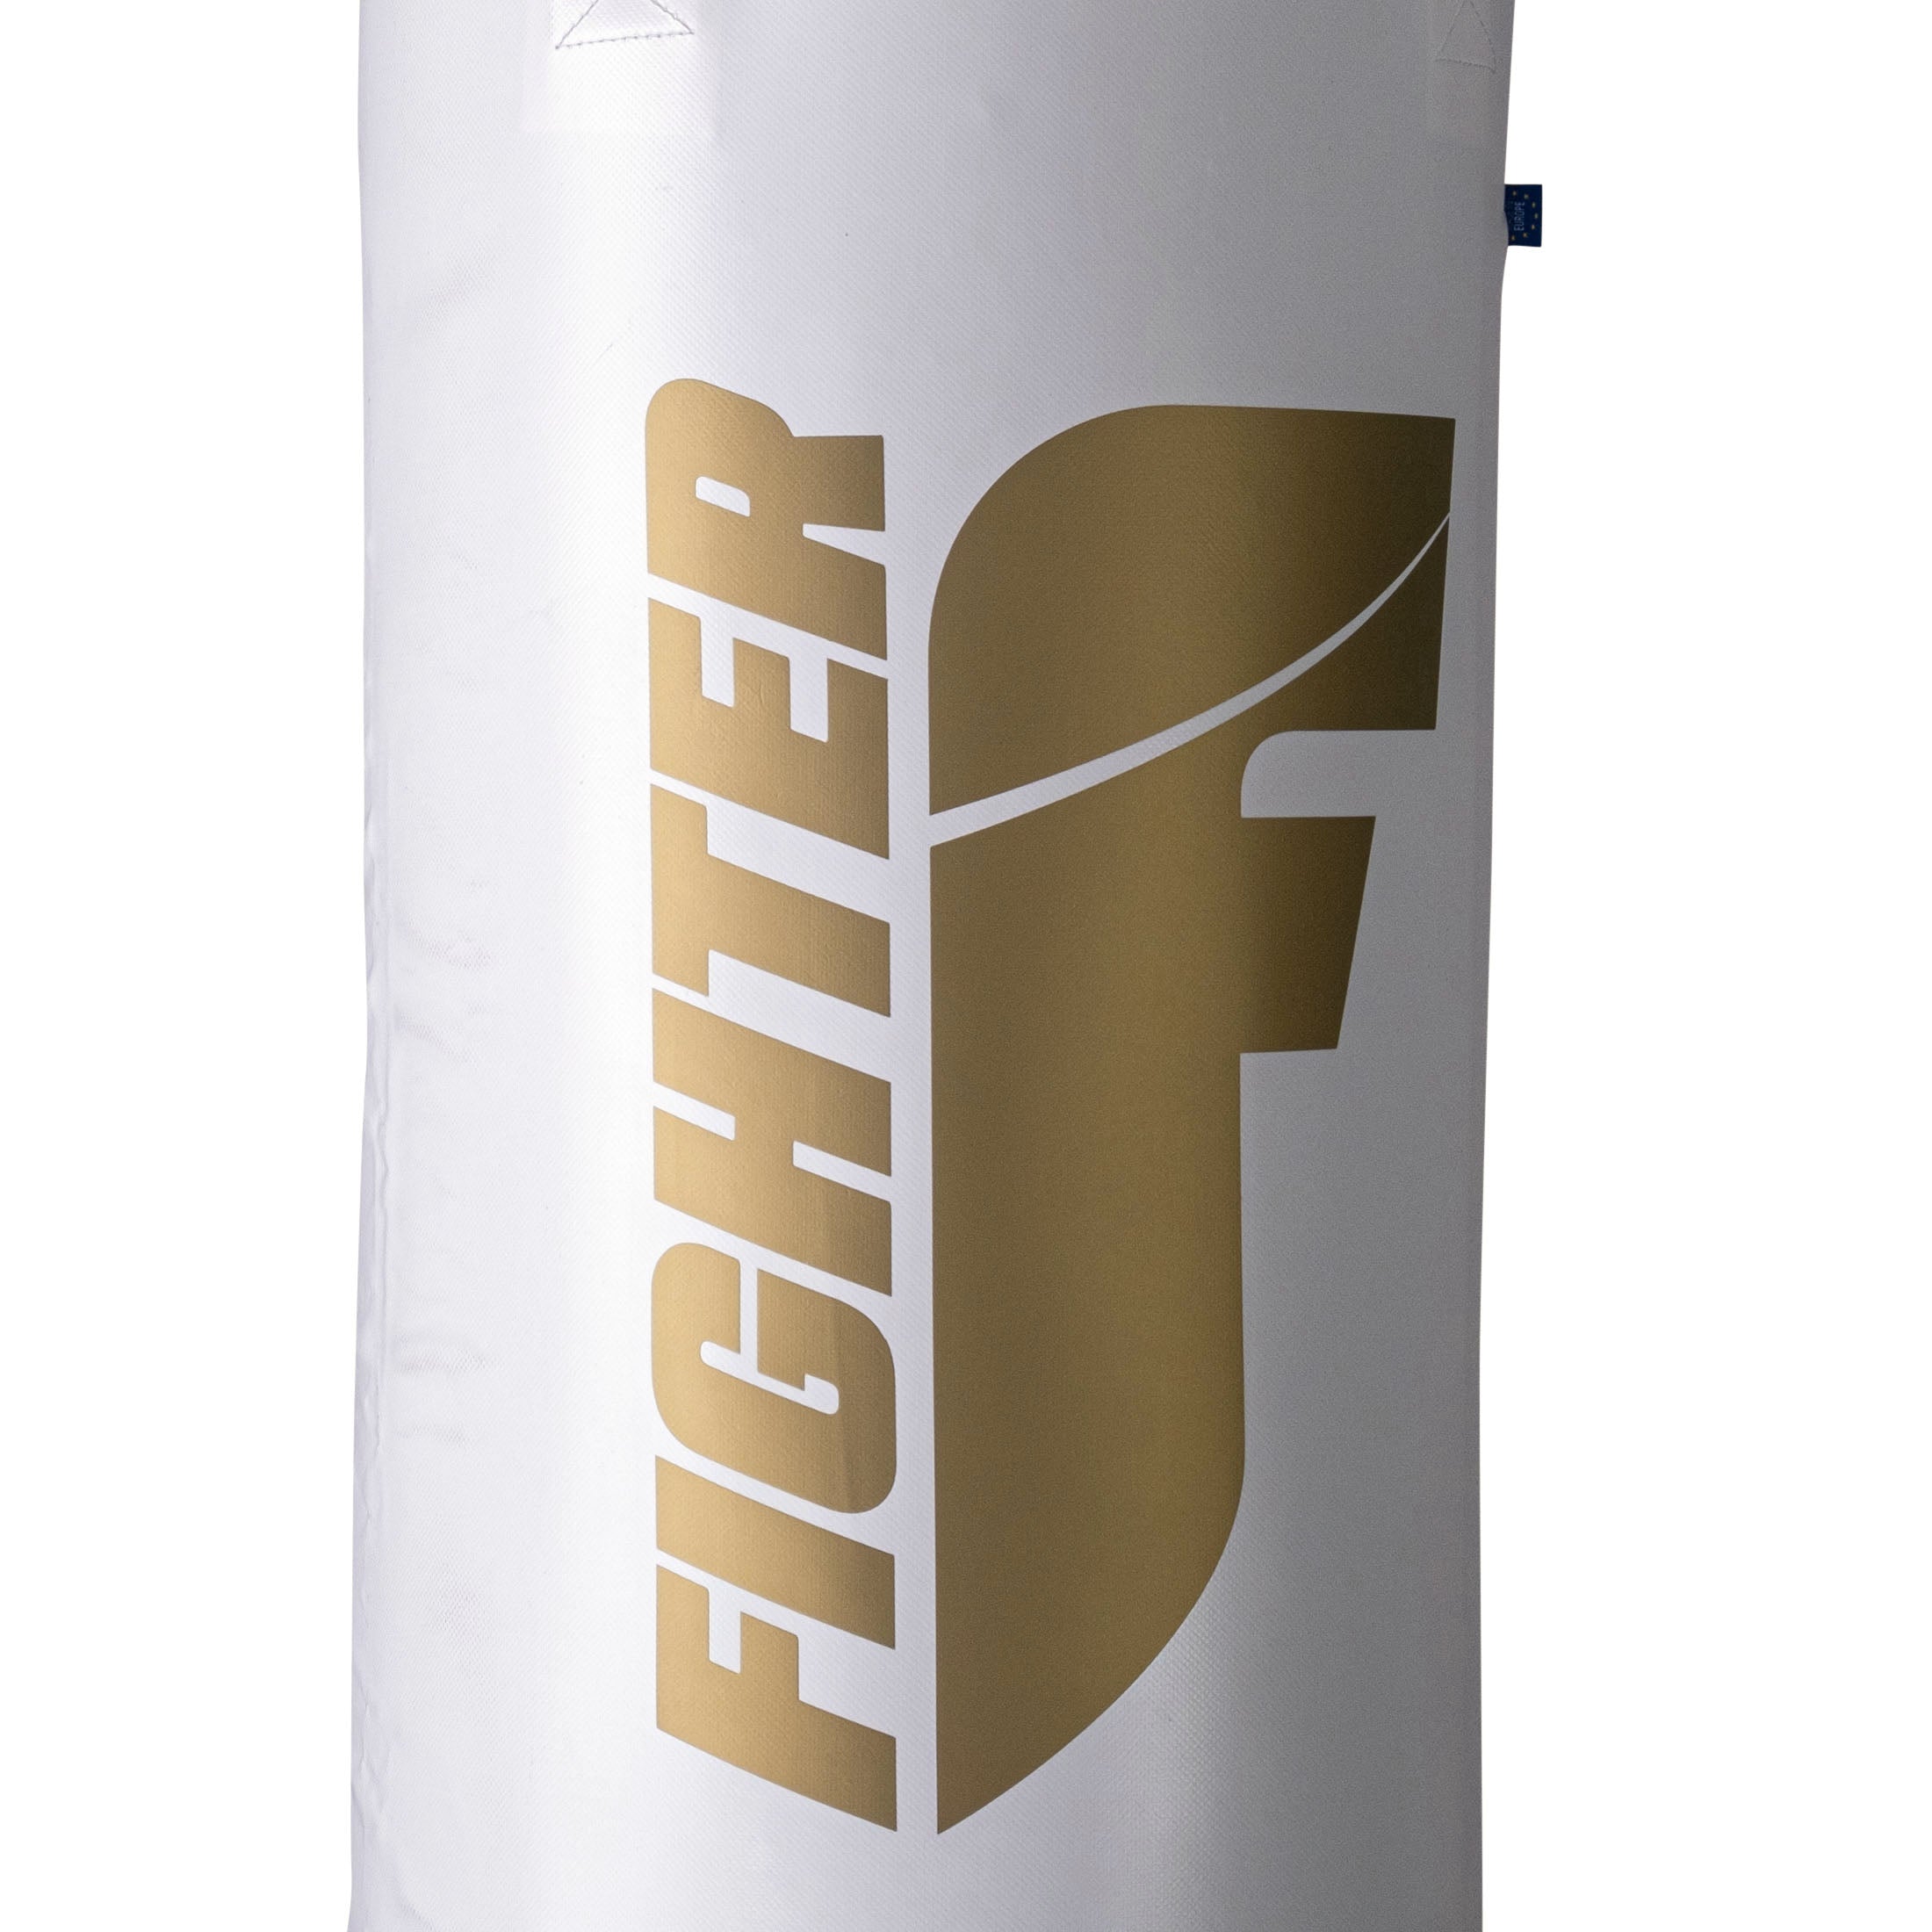 Fighter Boxing Bag Professional - white/gold, 150cm & 180cm; diameter 36cm